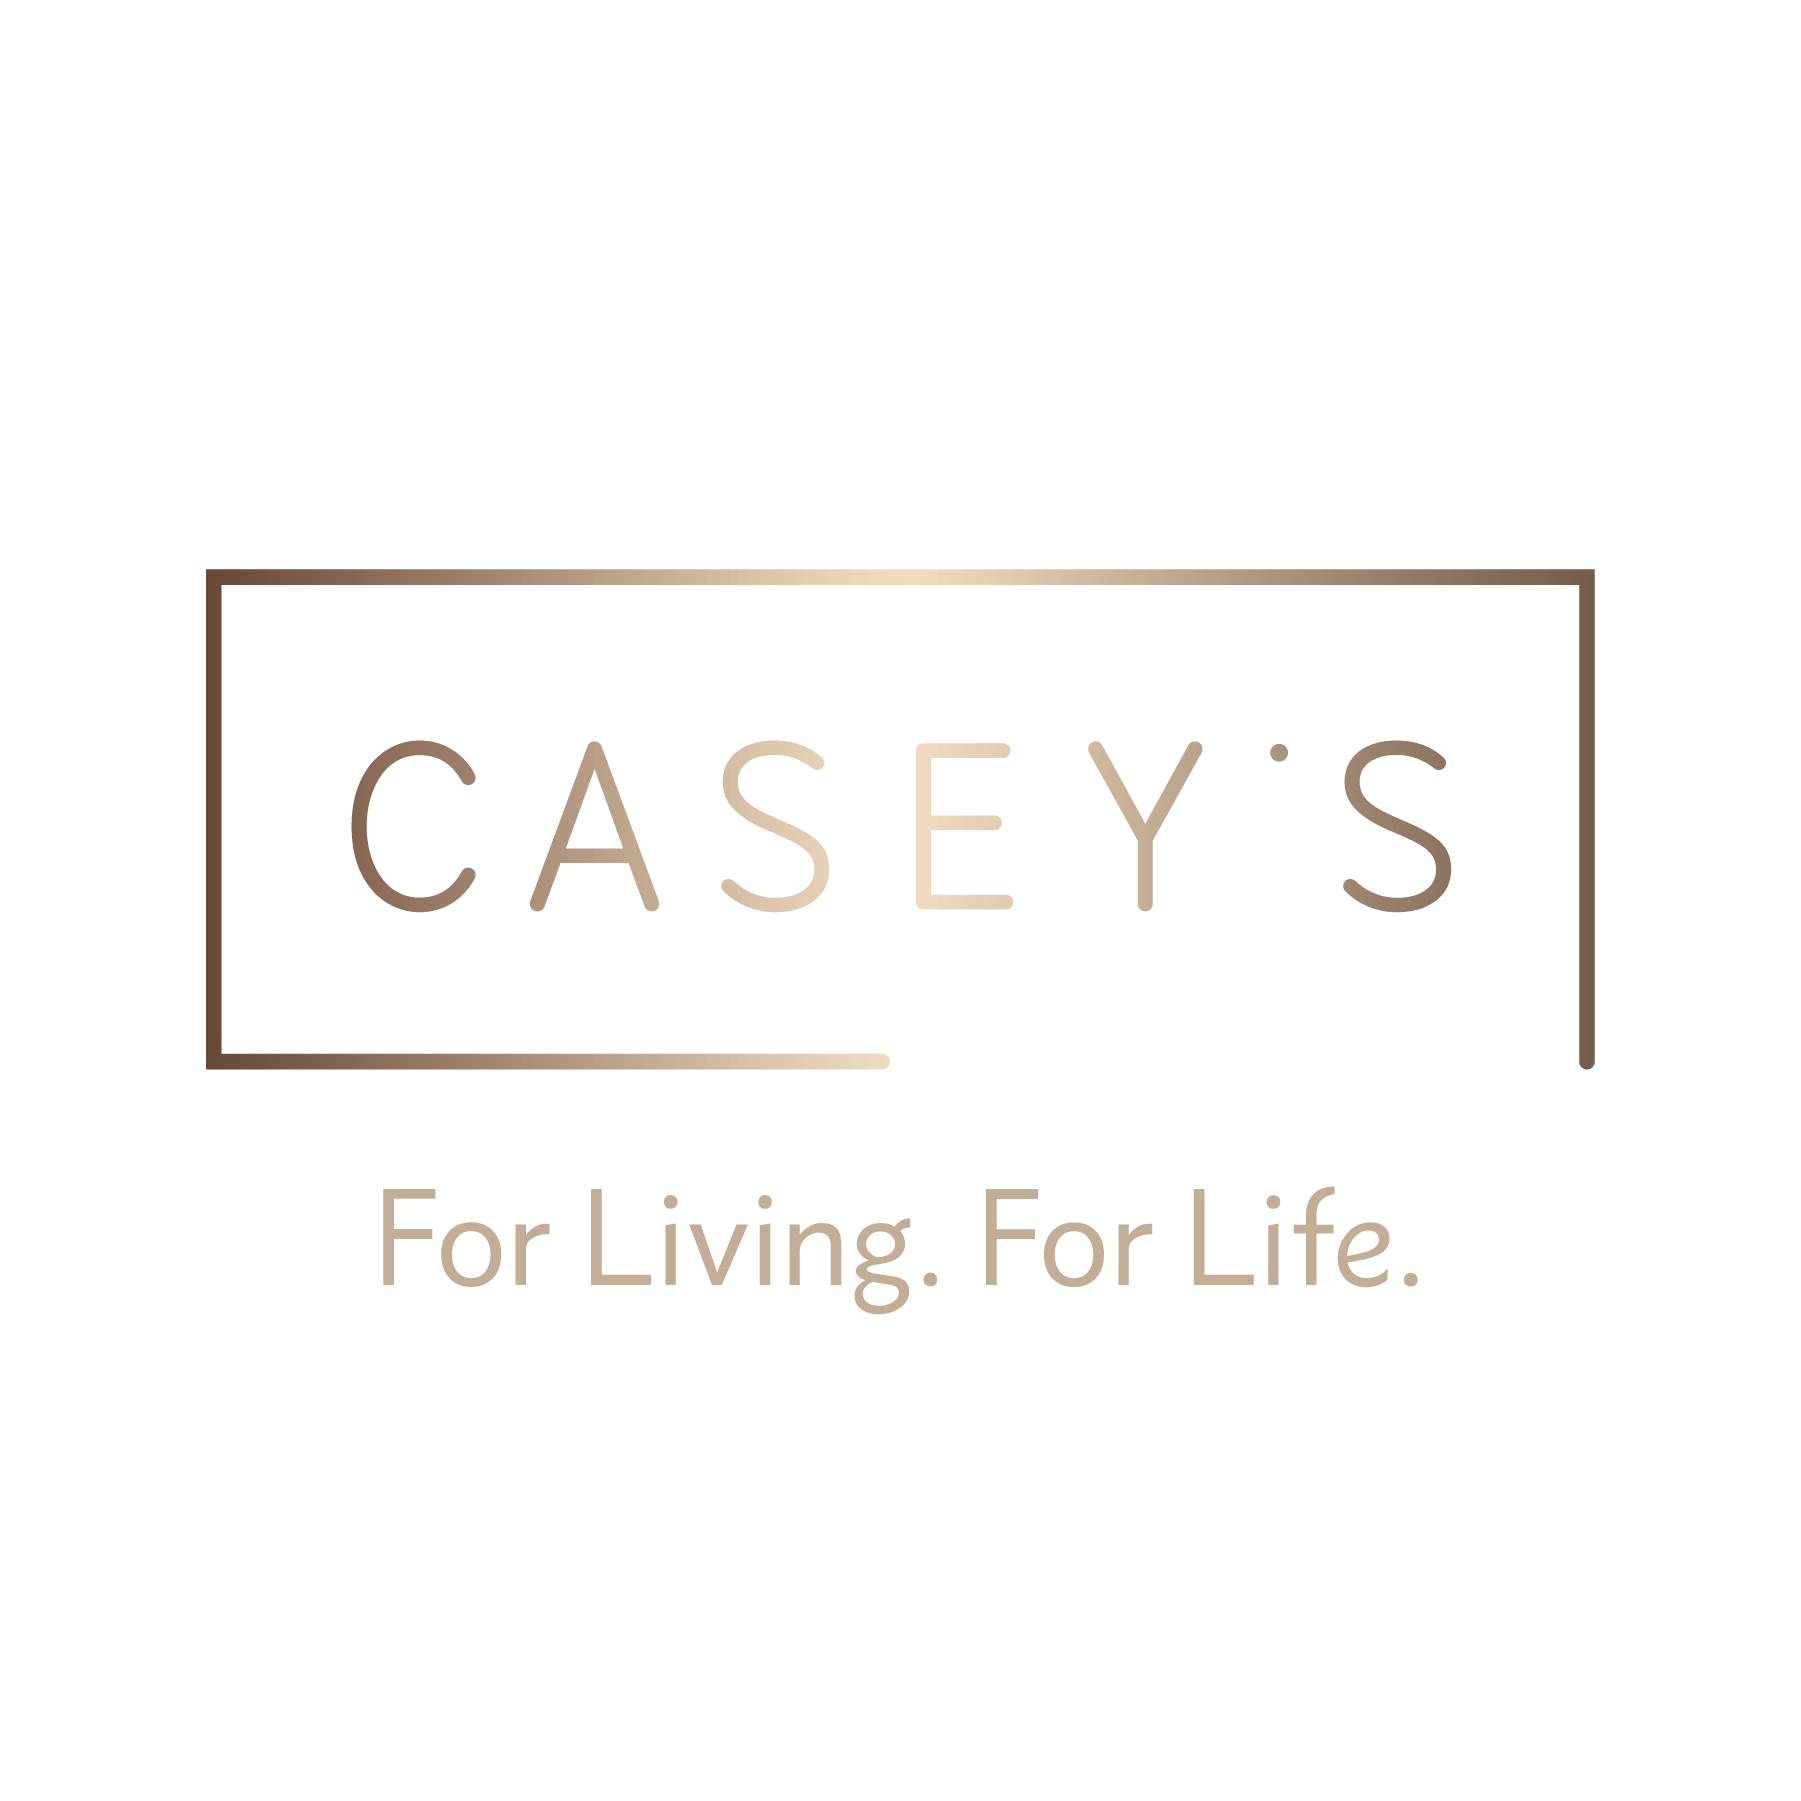 Casey's Creative Kitchens